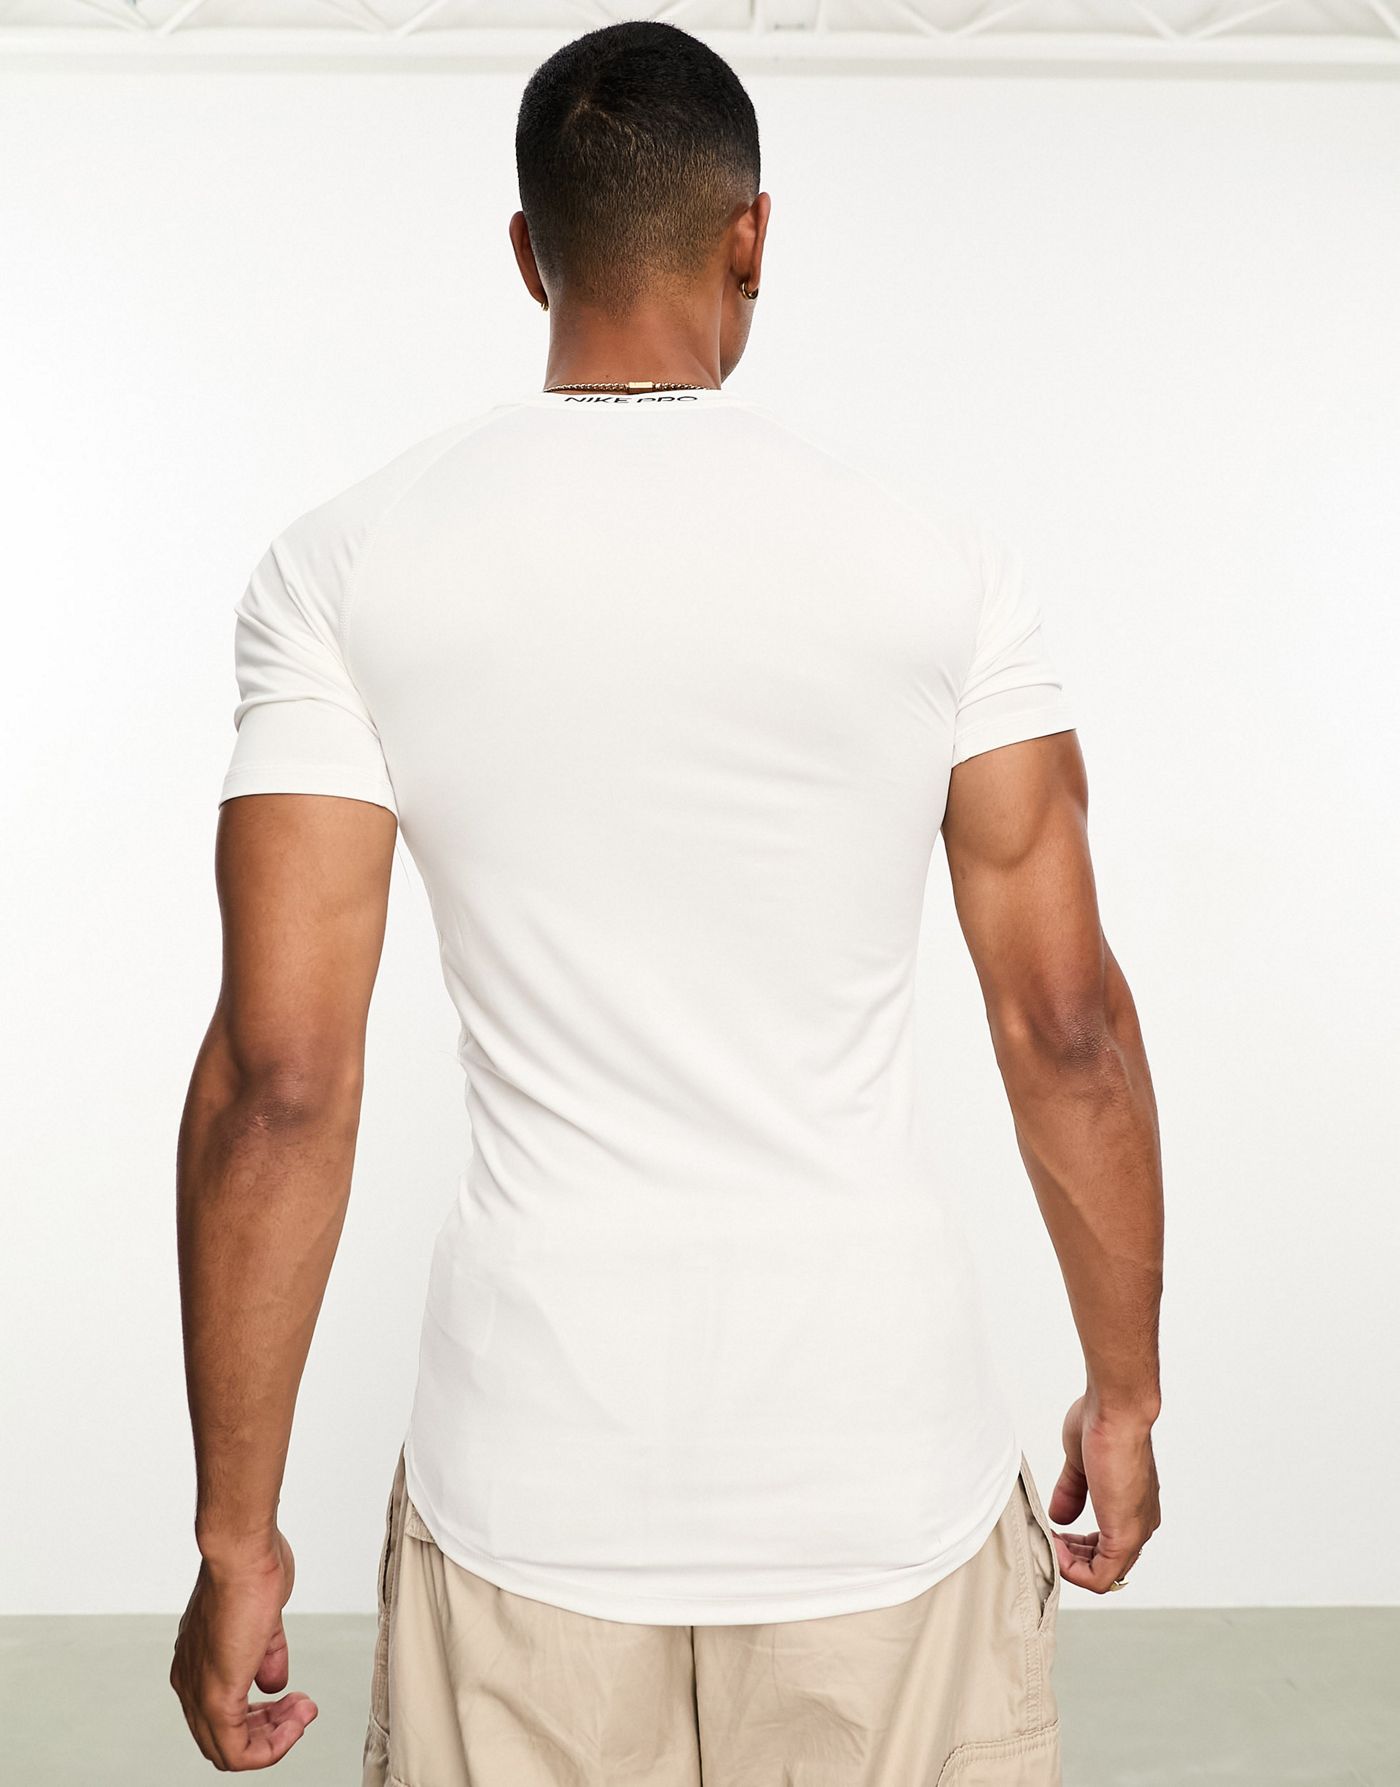 Nike Training Pro Dri-FIT tight t-shirt in white